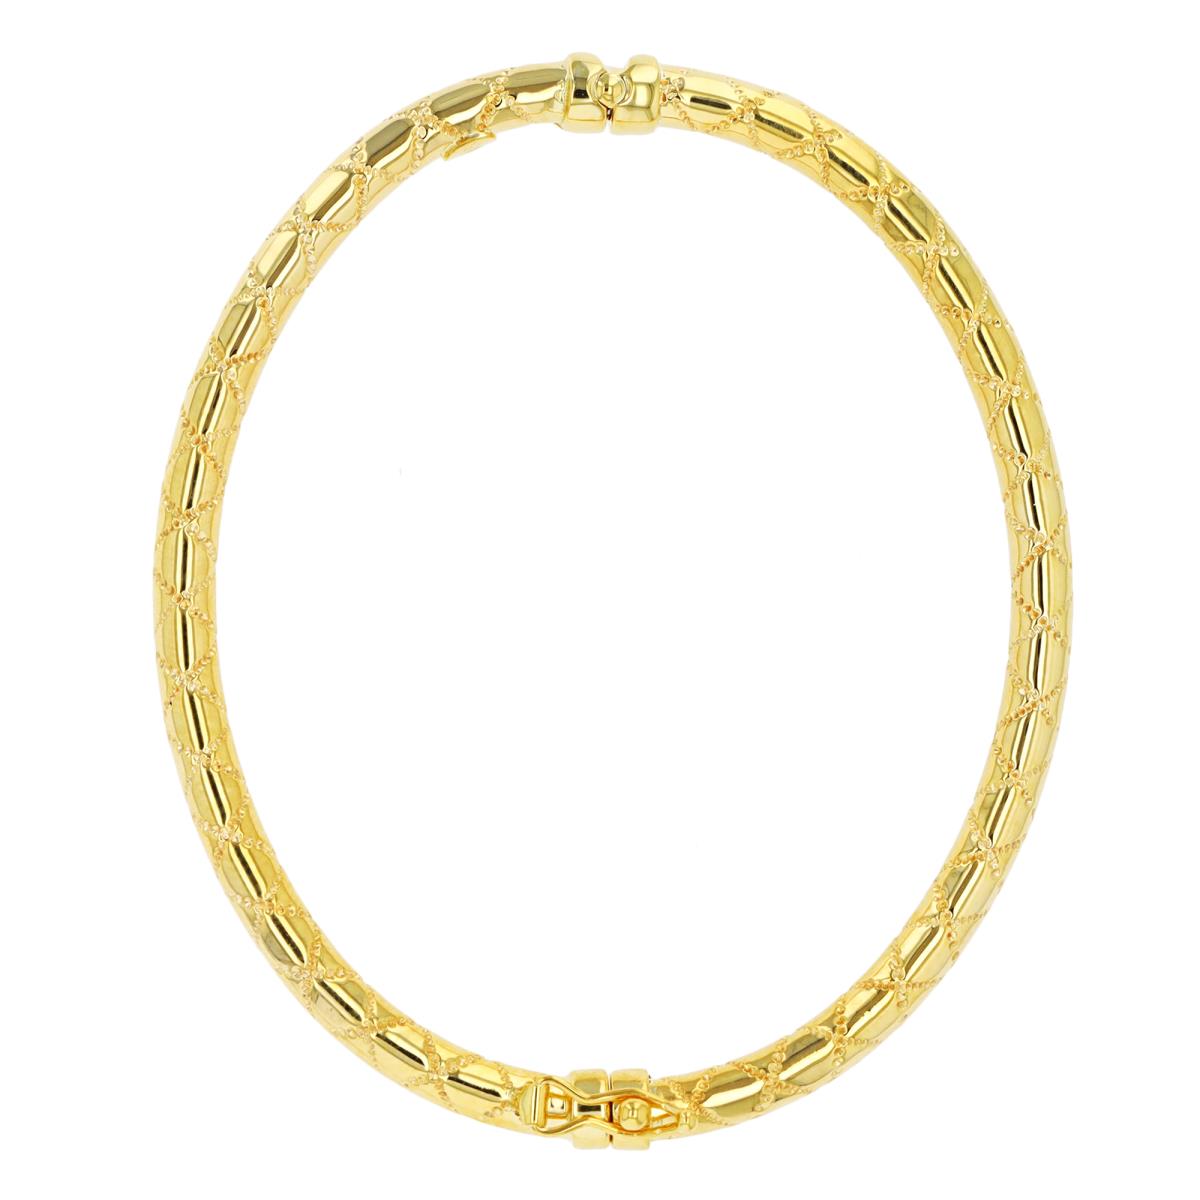 10K Yellow Gold Criss Cross-Textured Bangle Bracelet